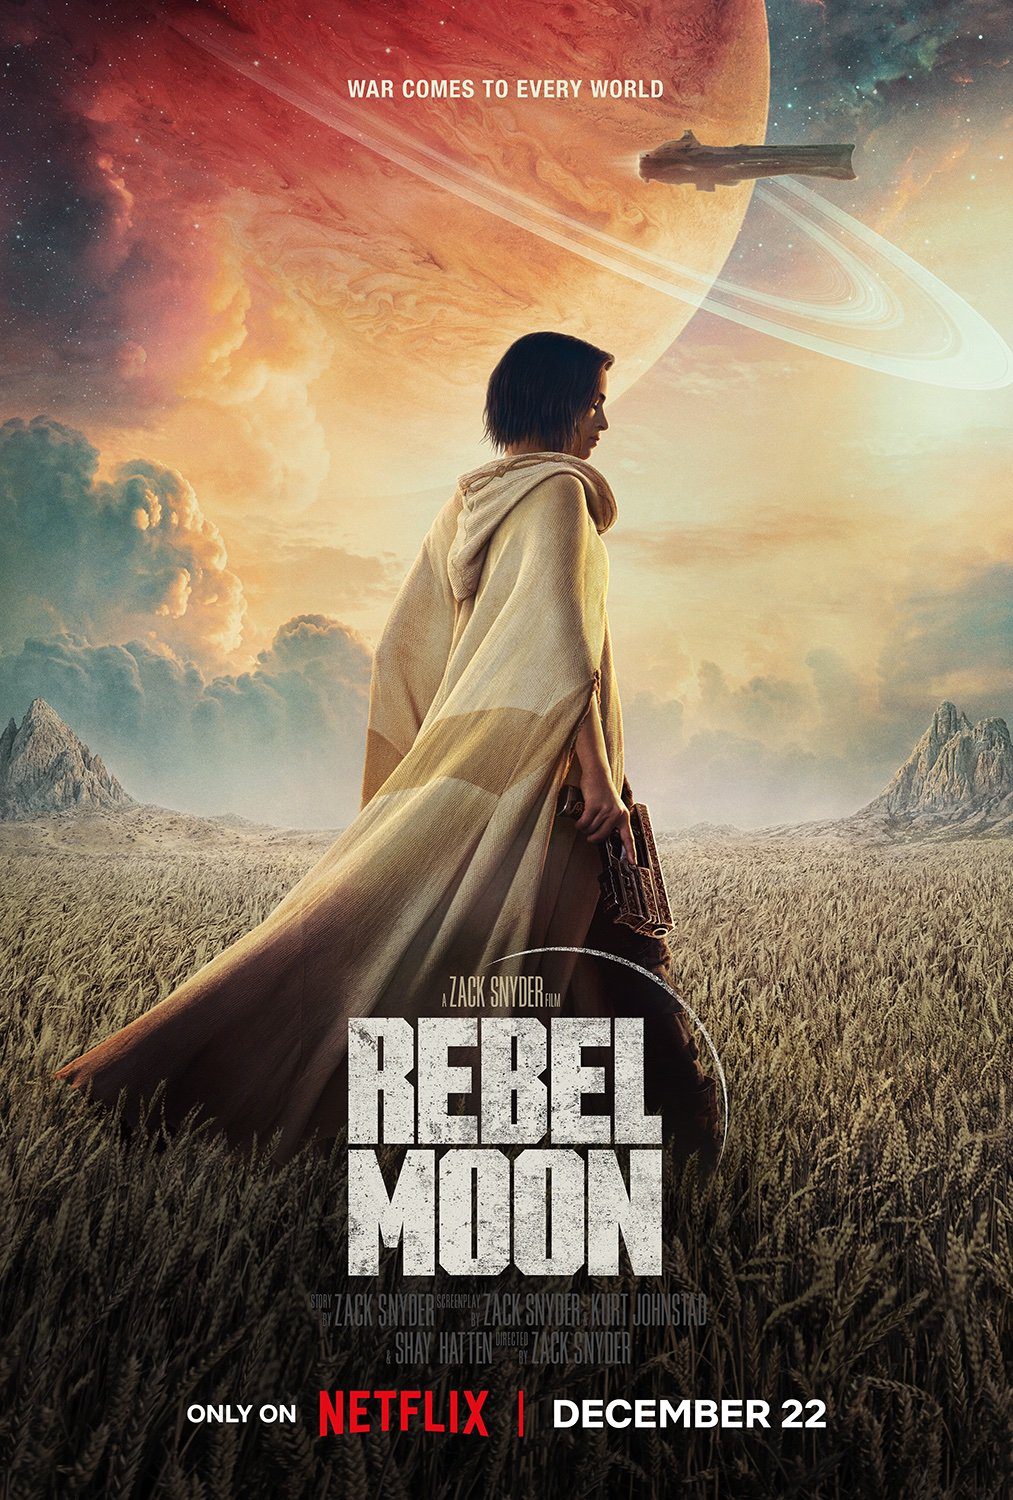 Filme de Zack Snyder na Netflix, Rebel Moon revela primeiros nomes